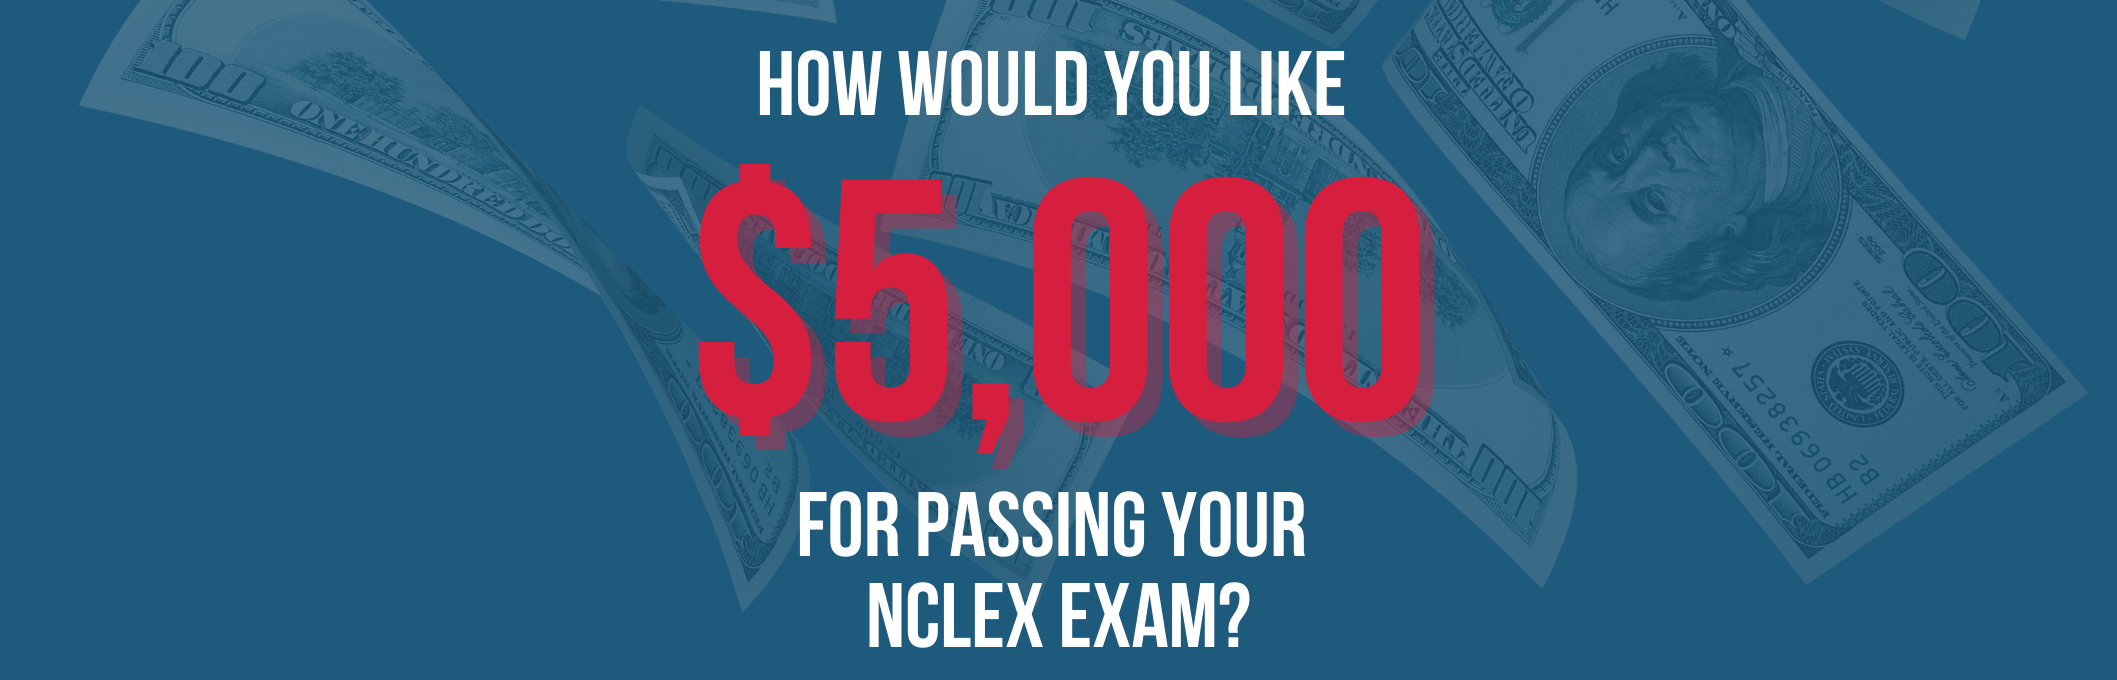 Nclex Bonus Email Header